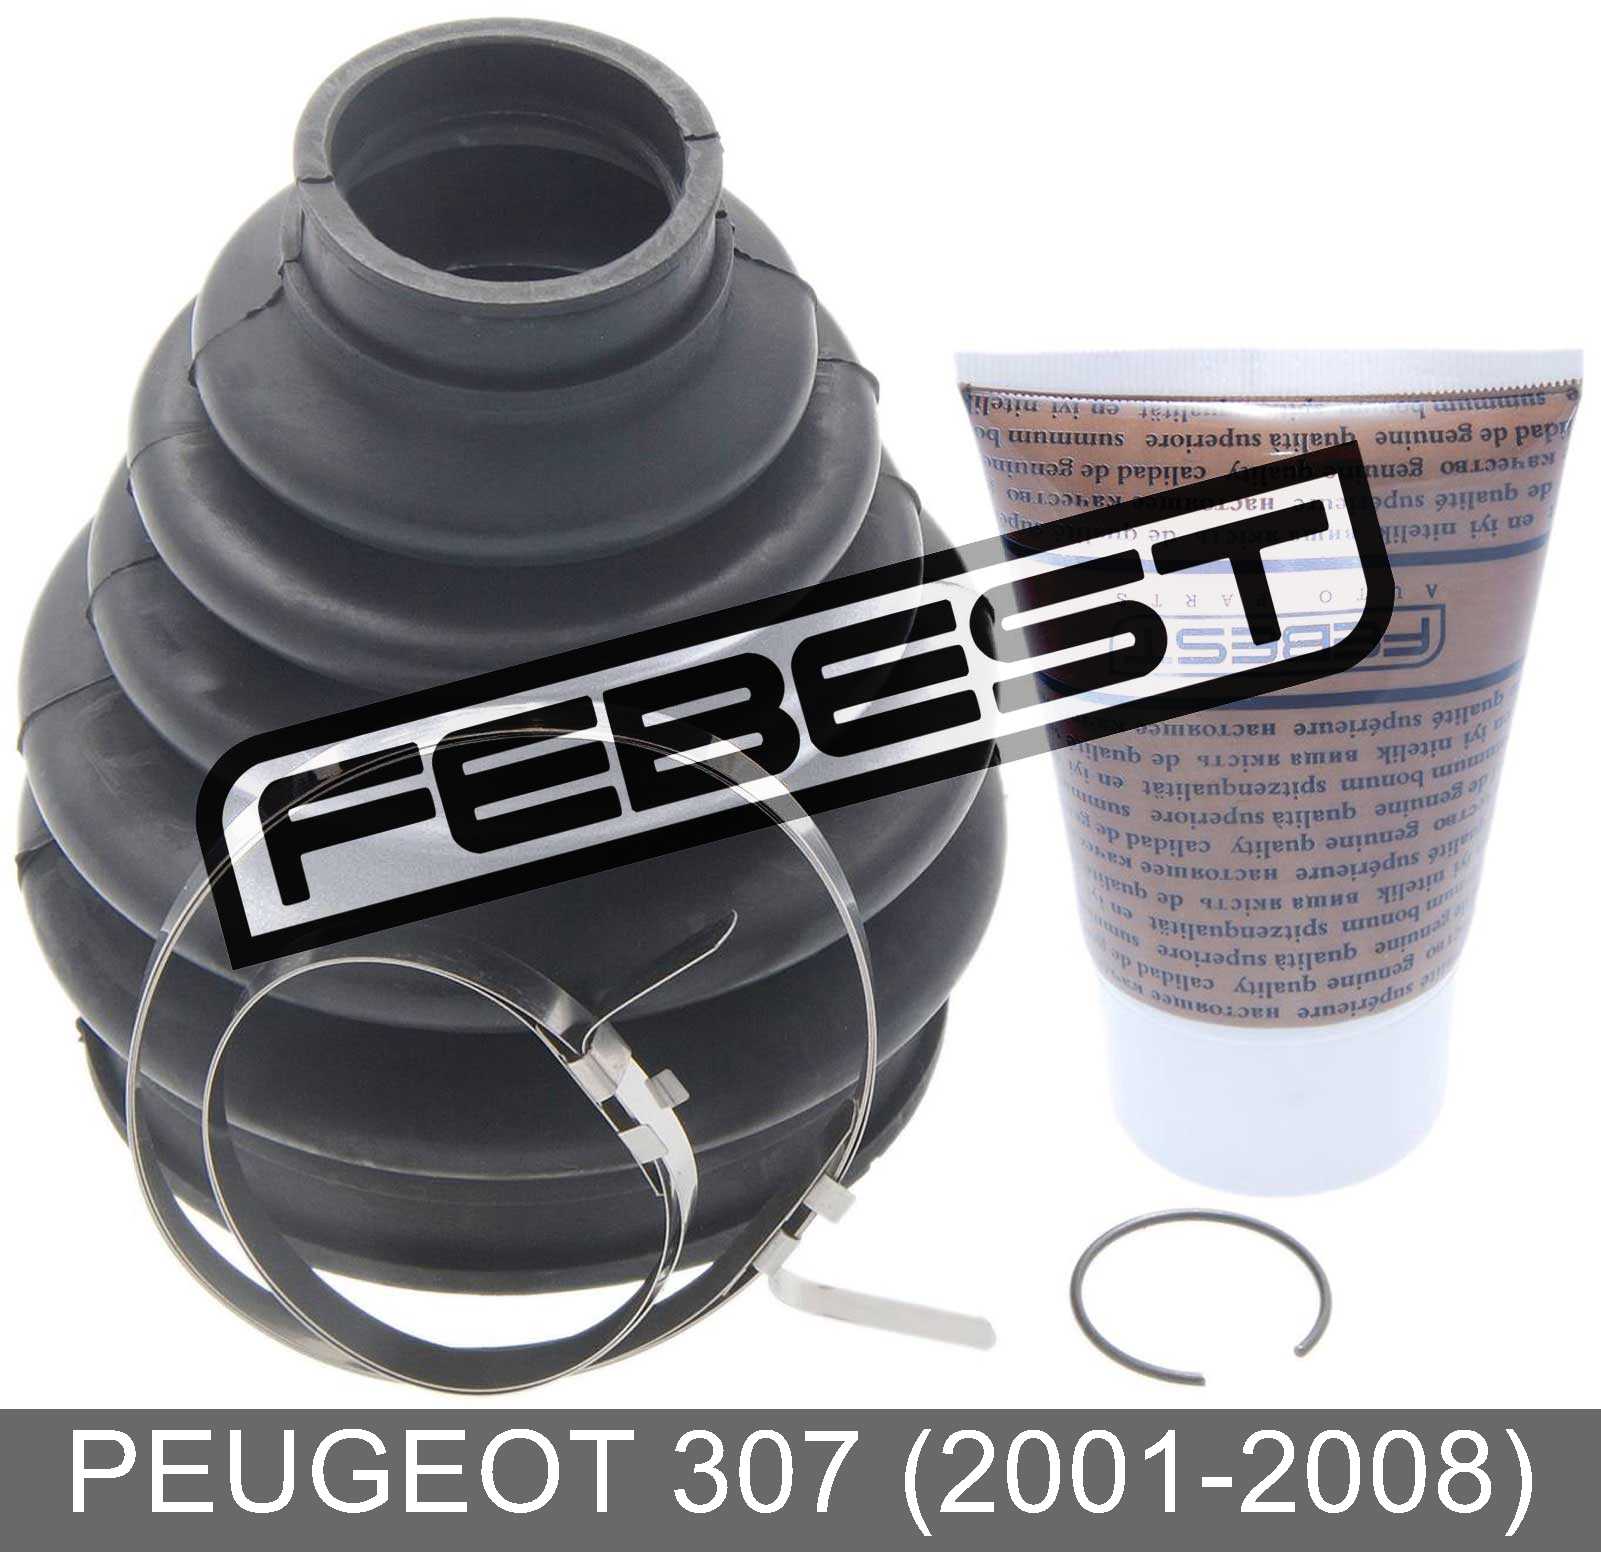 PEUGEOT 2517-C5_JJ Product Photo